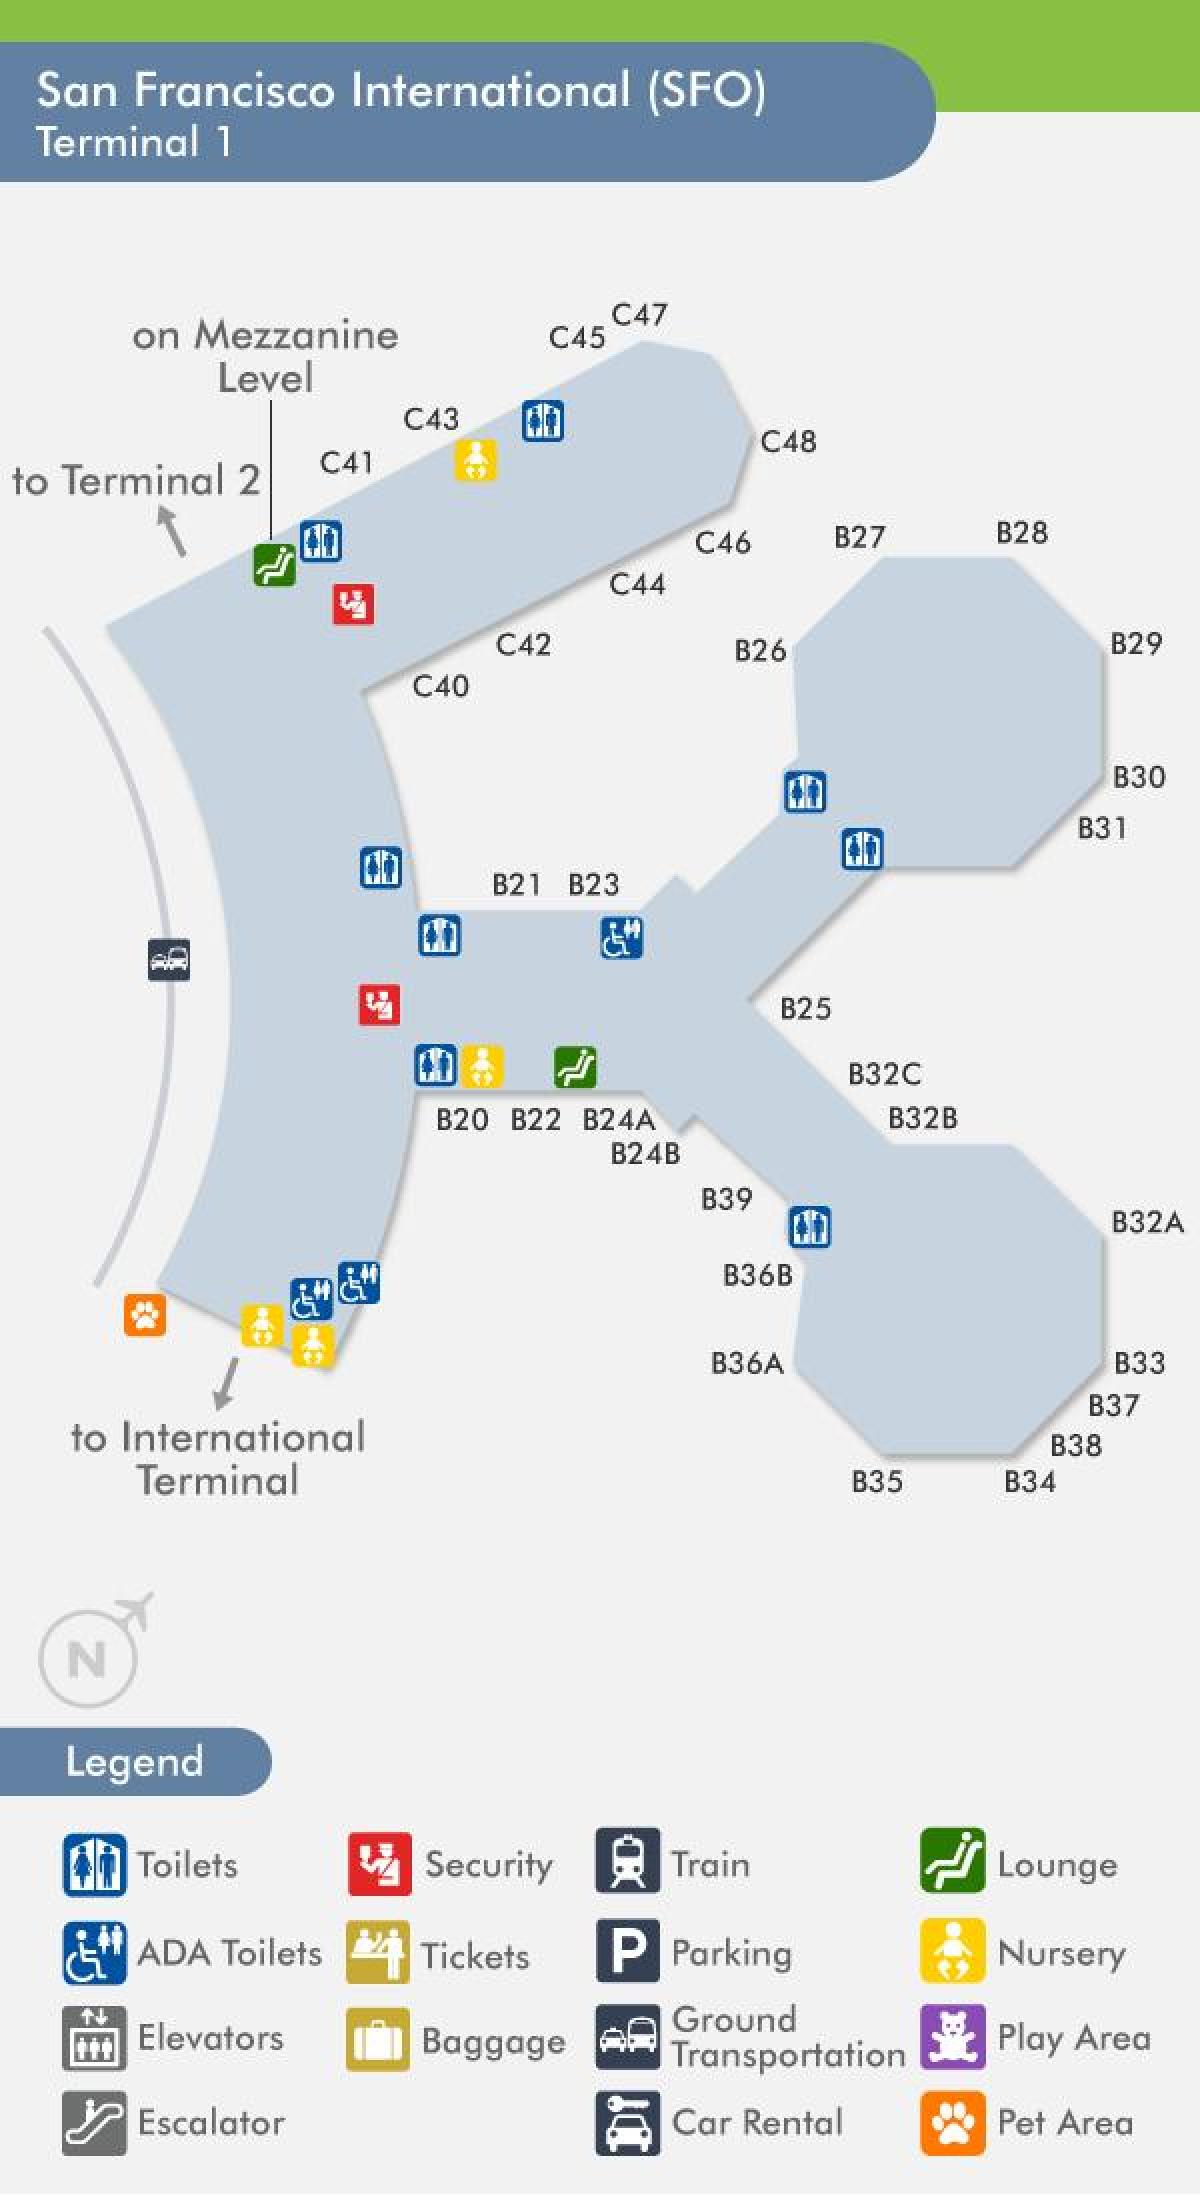 San Francisco airport terminal 1 map